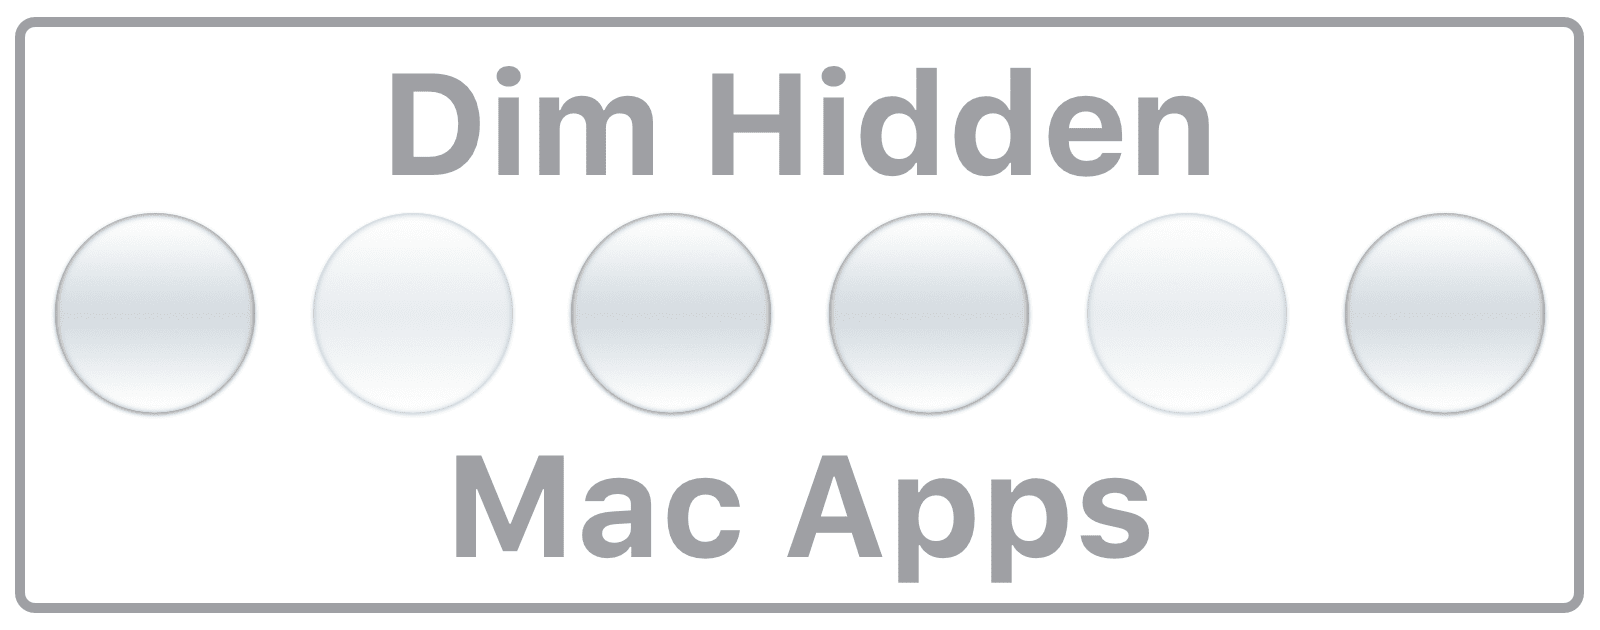 macOS: How to Dim Hidden Mac Apps on the Dock